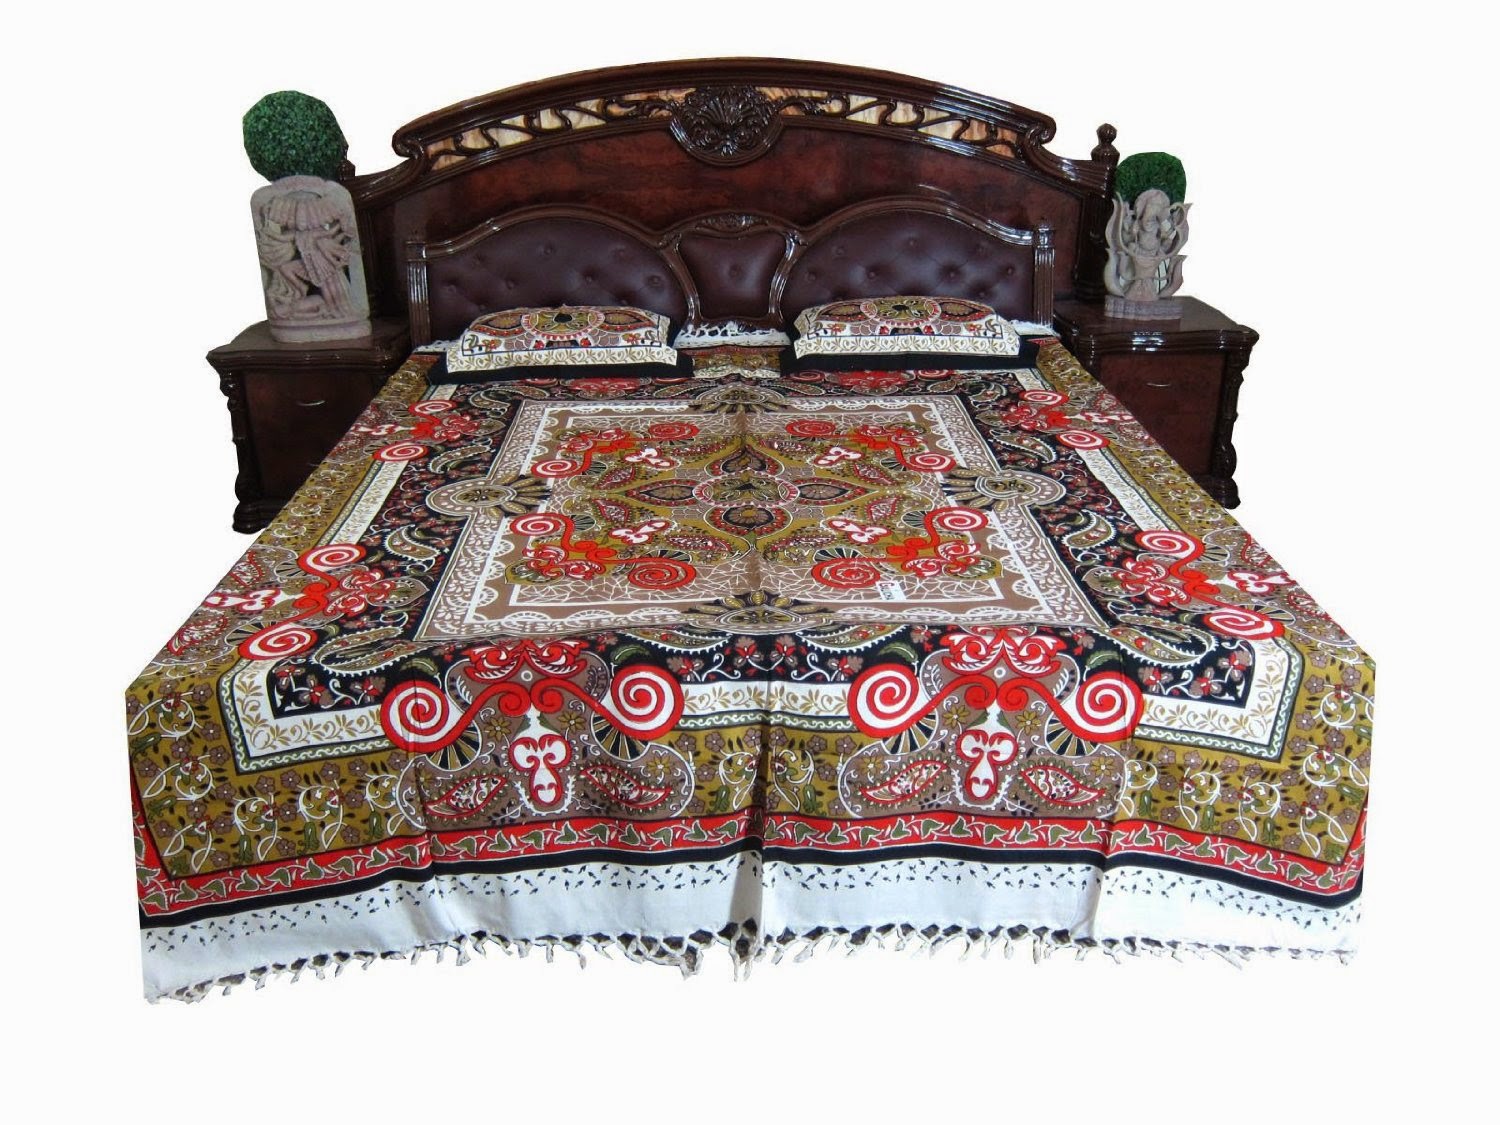 http://www.amazon.com/Tapestry-Bedcover-Blanket-Bedspreads-Tablecloth/dp/B00RCLJVUU/ref=sr_1_4?m=A1FLPADQPBV8TK&s=merchant-items&ie=UTF8&qid=1426756963&sr=1-4&keywords=bedspread